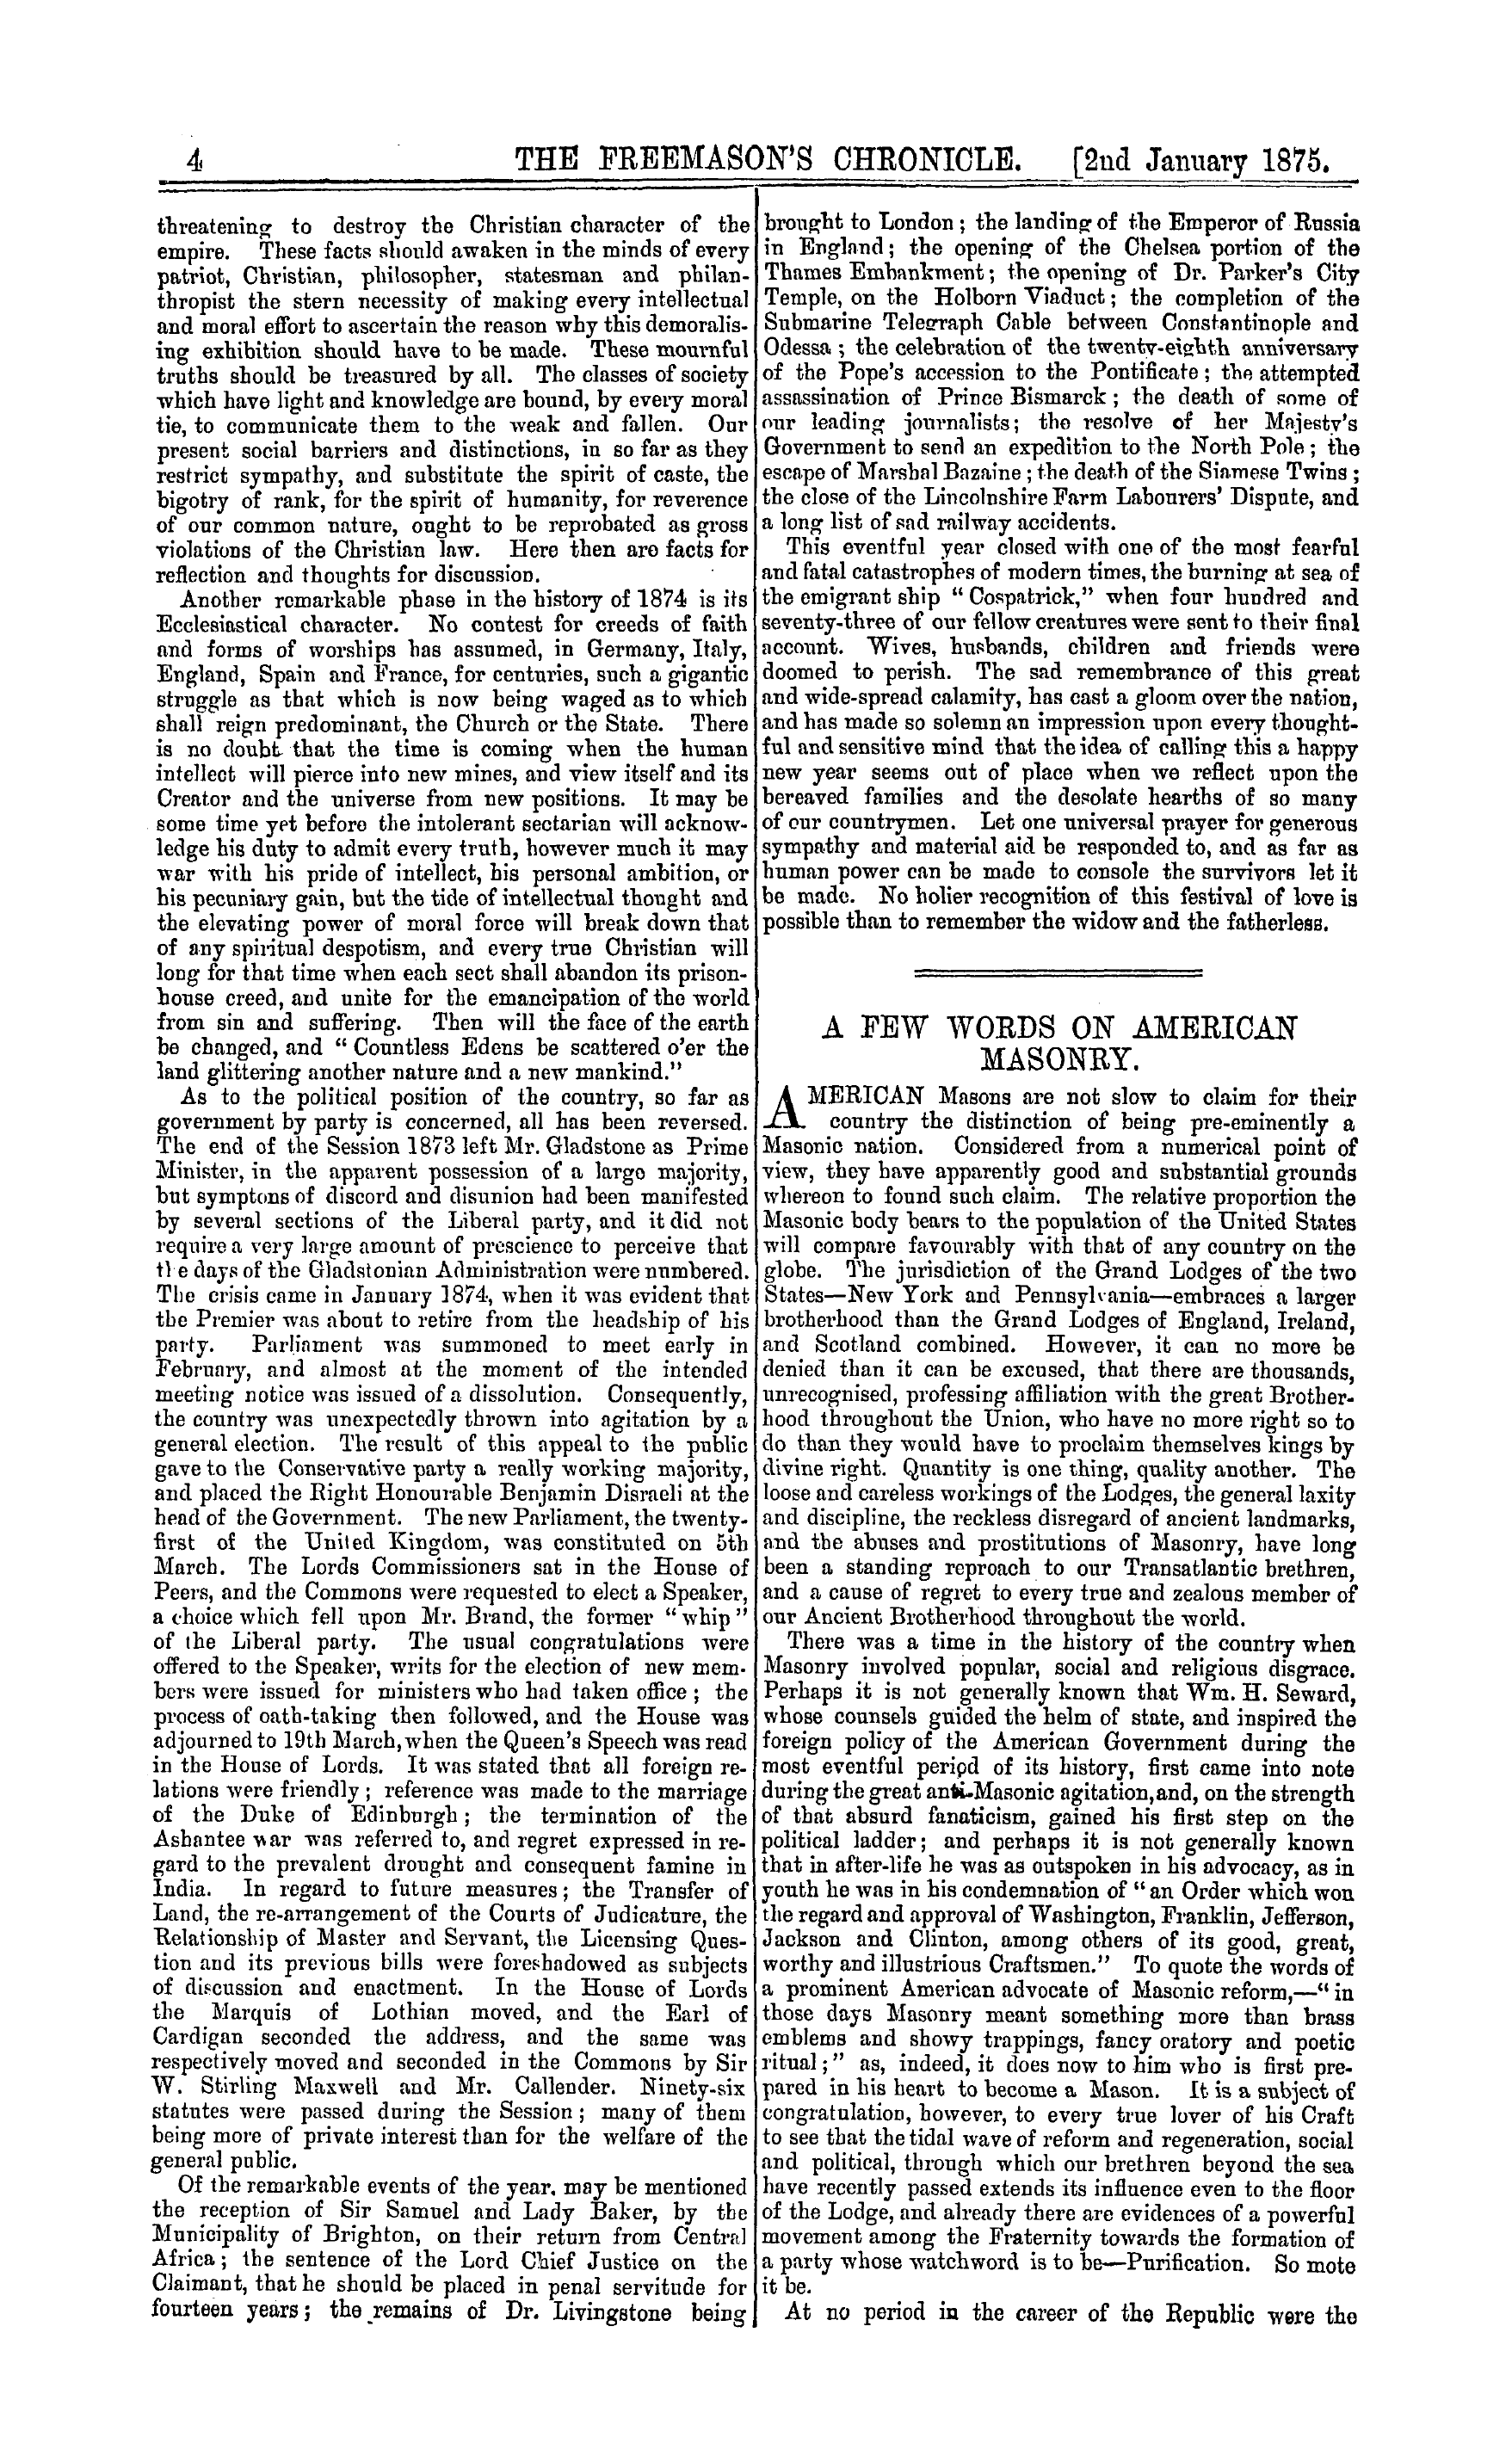 The Freemason's Chronicle: 1875-01-02 - The Year 1874.